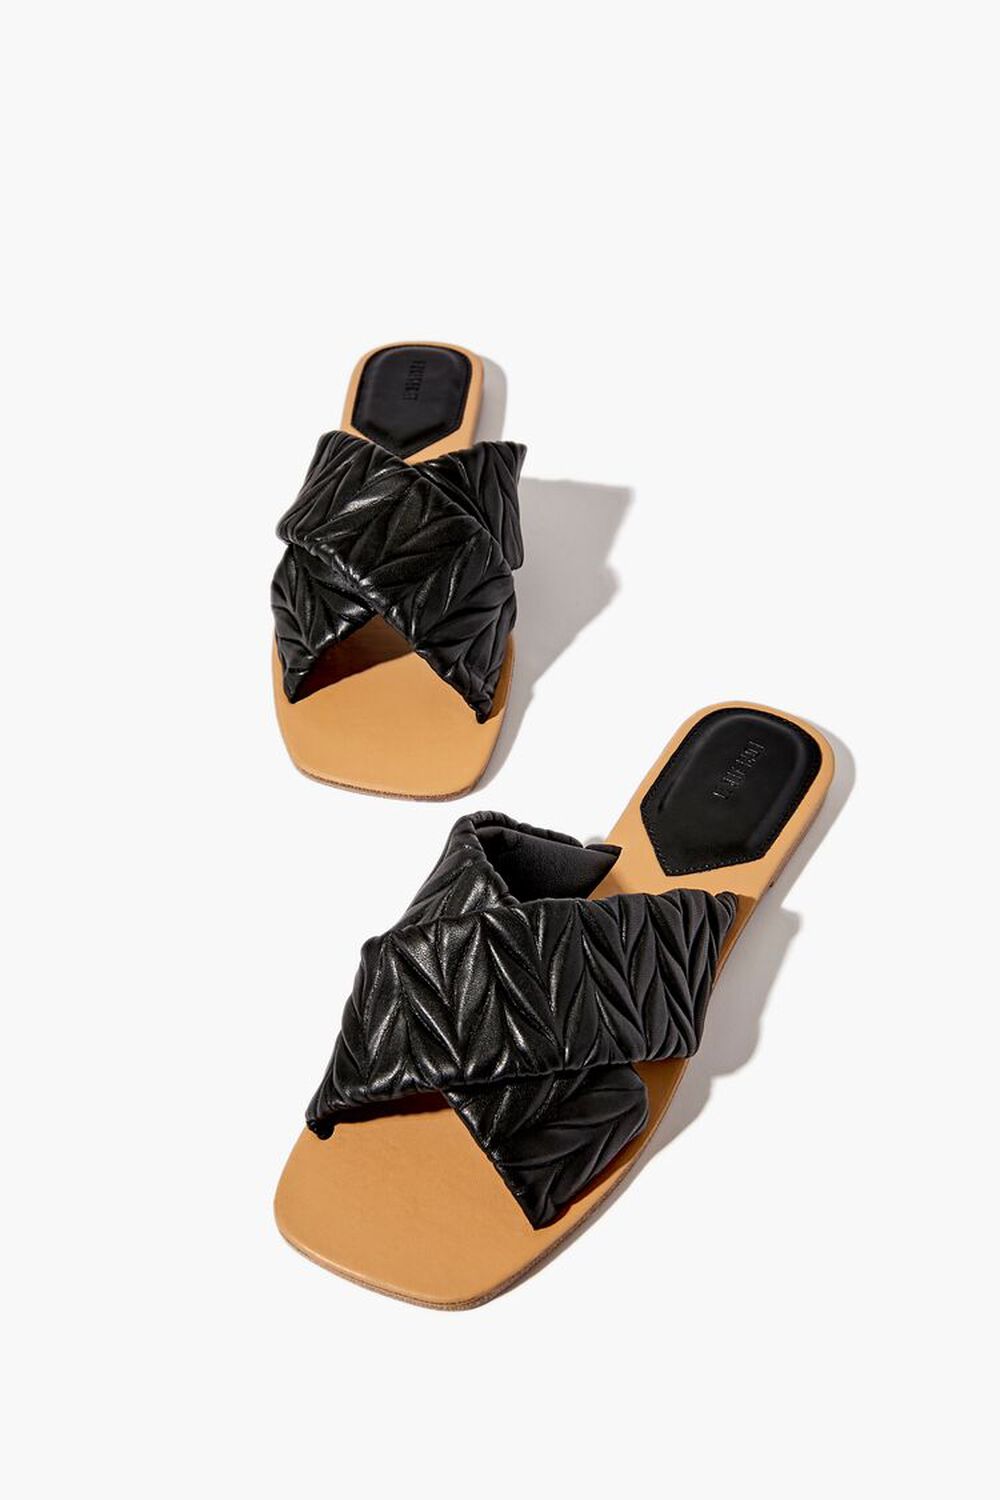 BLACK Textured Crisscross Sandals, image 1